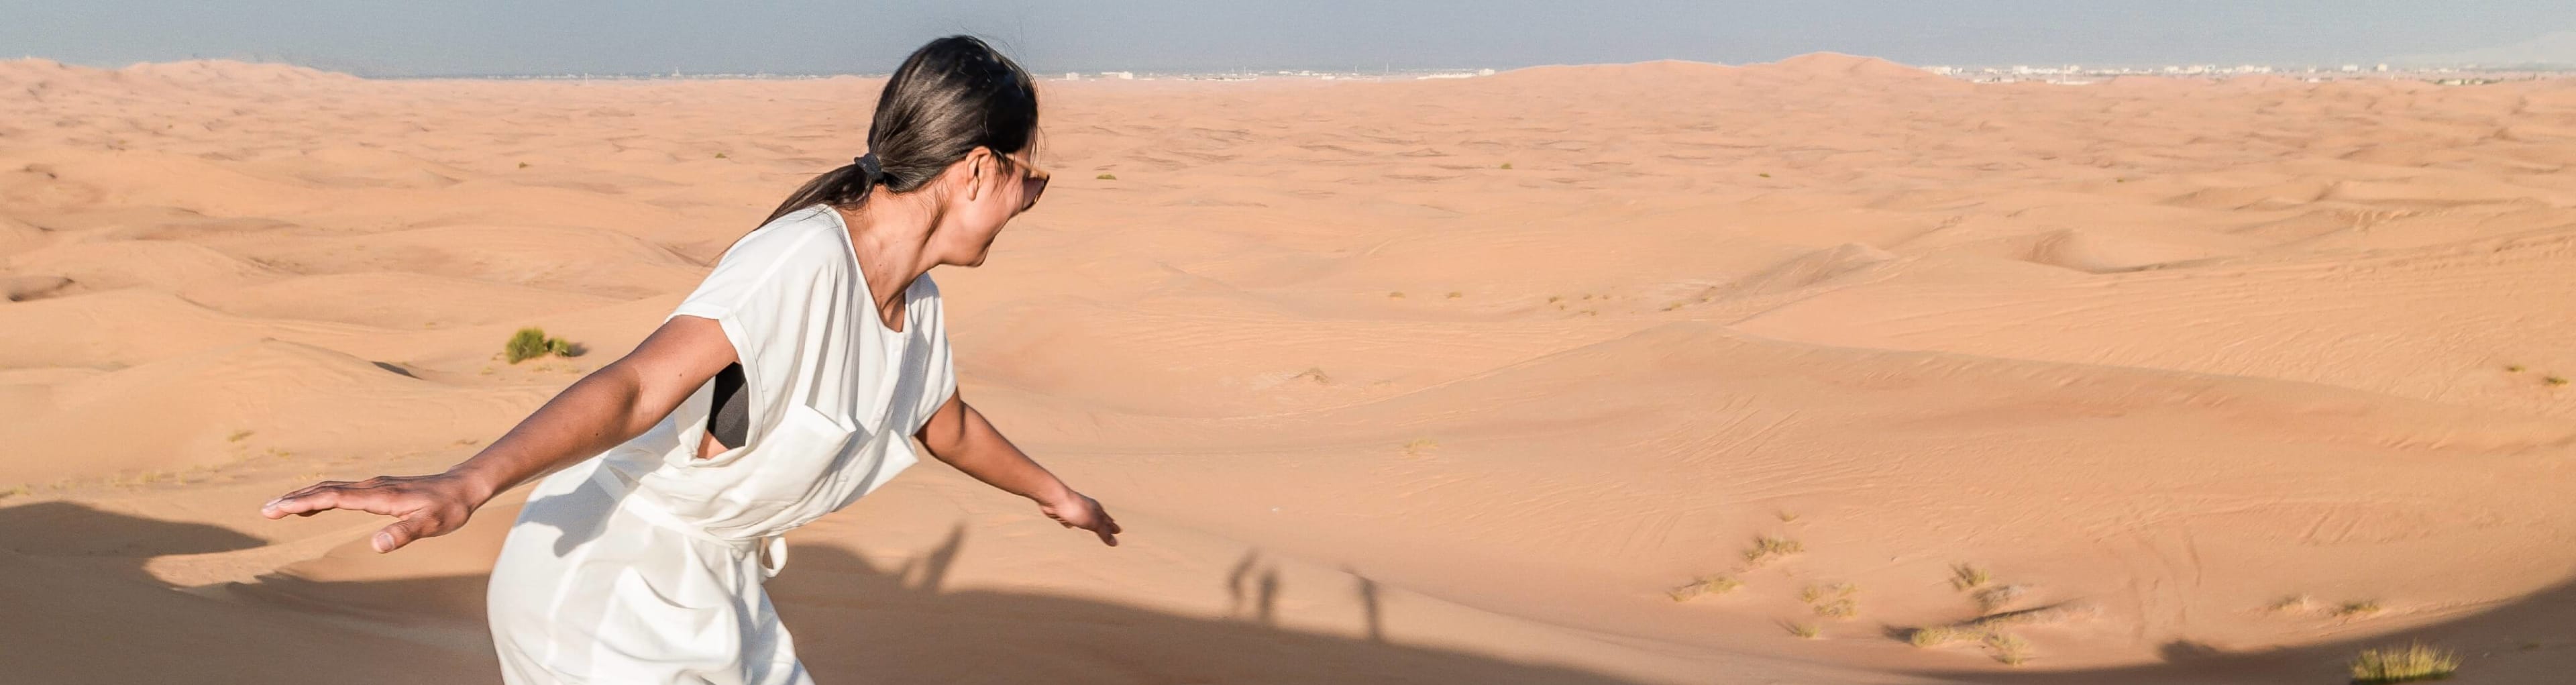 A woman tries sandboarding down a Dubai desert dune